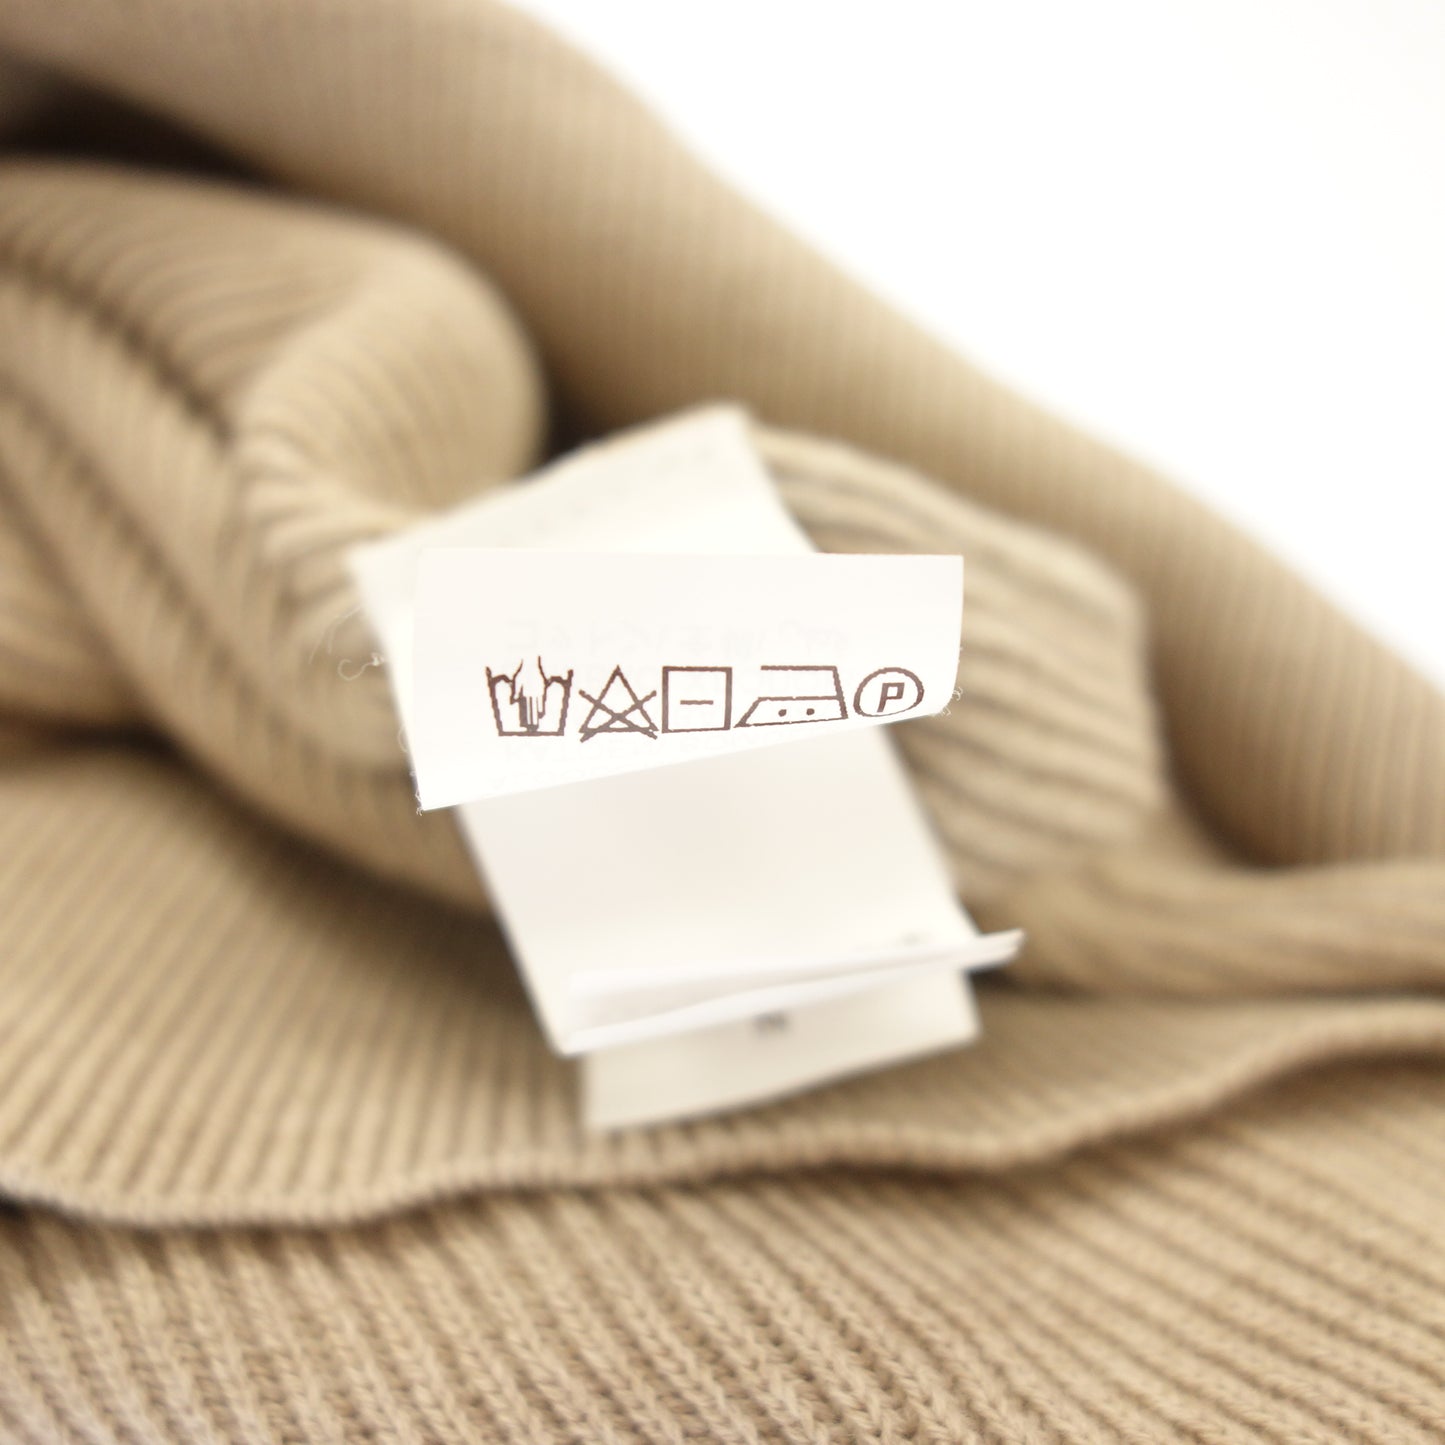 Good Condition◆Brunello Cucinelli Knit Parka Cotton Pullover Men's Beige Size 48 BRUNELLO CUCINELLI [AFB29] 